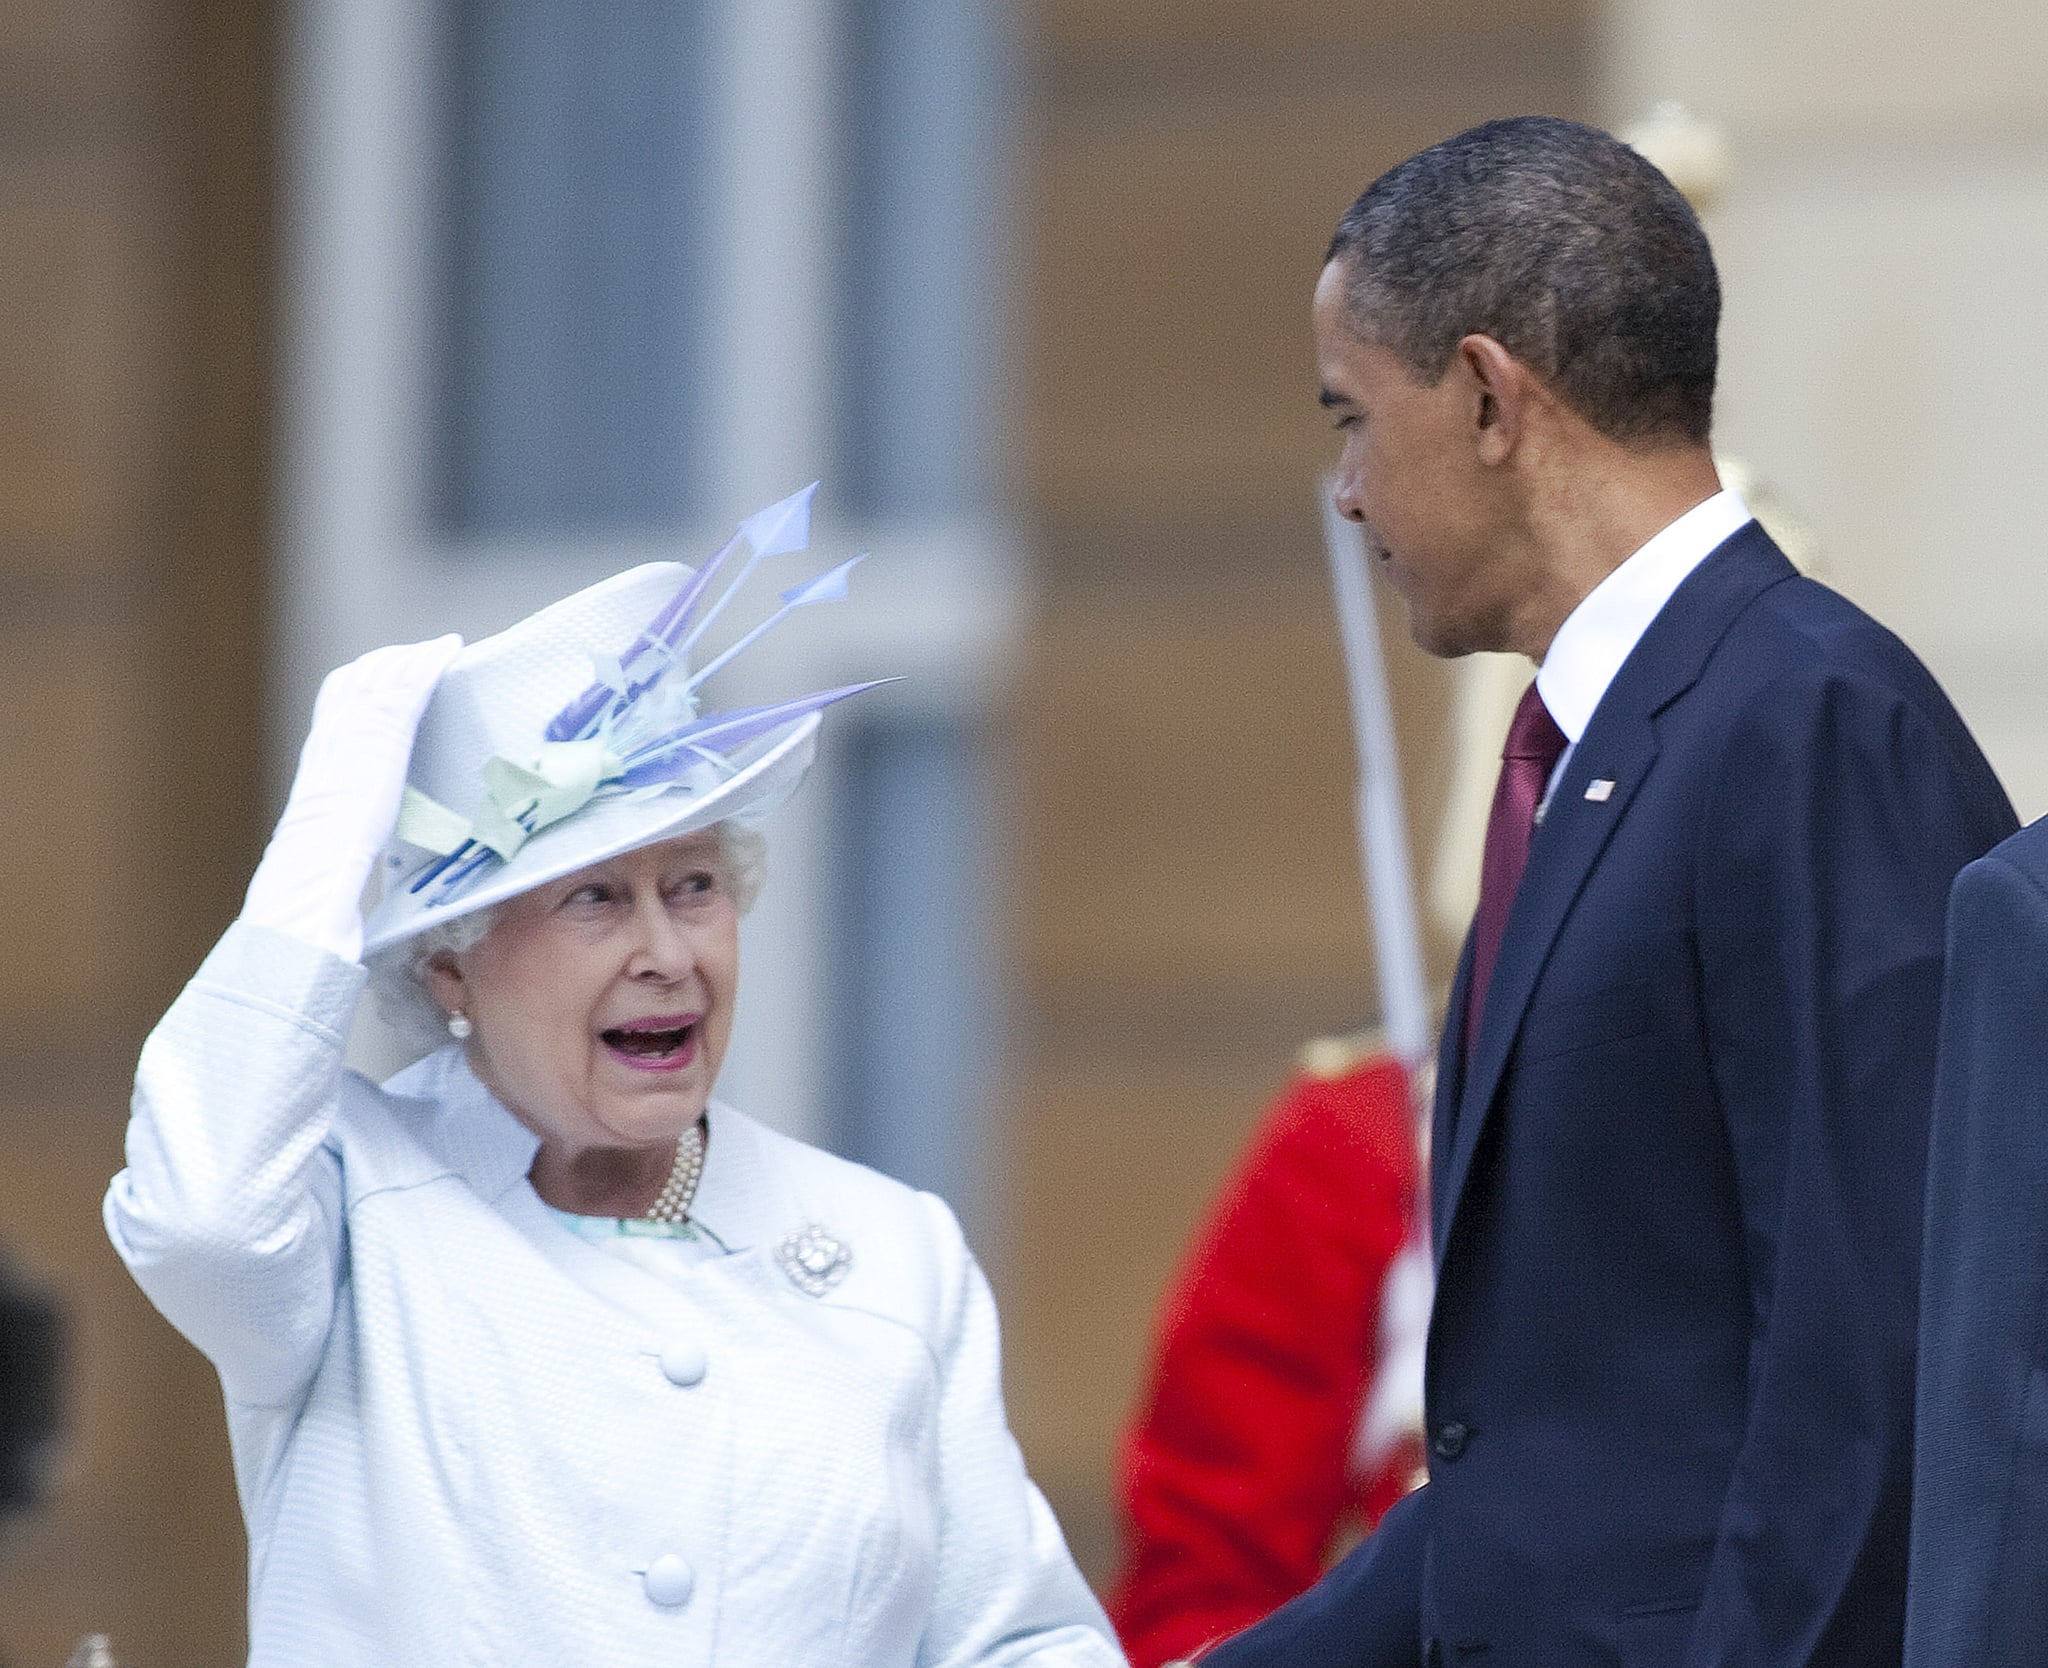 Queen Elizabeth II adjust her hat and talks to U.S. President Barack Obama in 2011